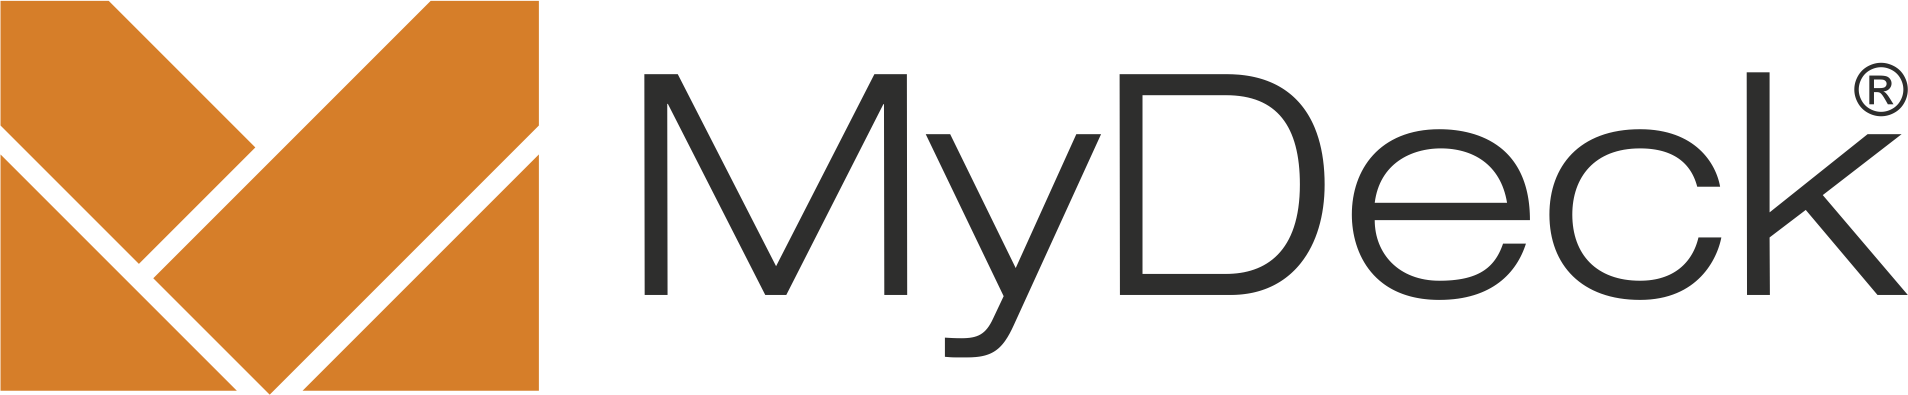 MyDeck